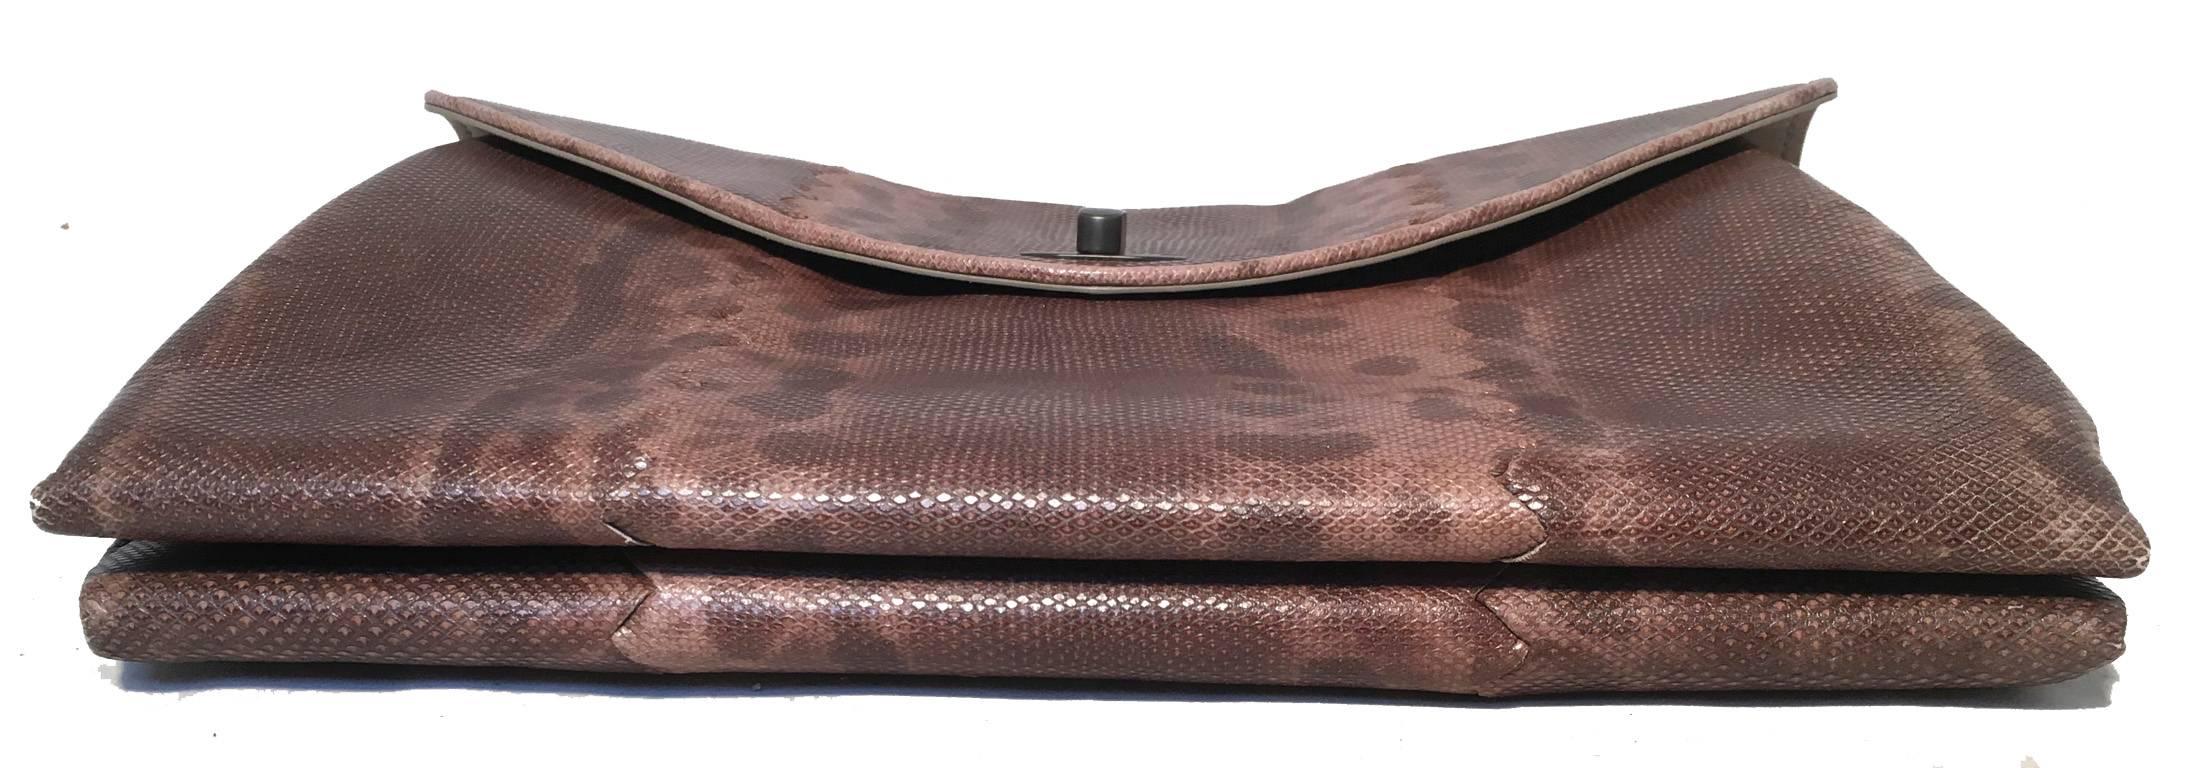 Bottega Veneta Brown Lizard Leather Clutch In Excellent Condition For Sale In Philadelphia, PA